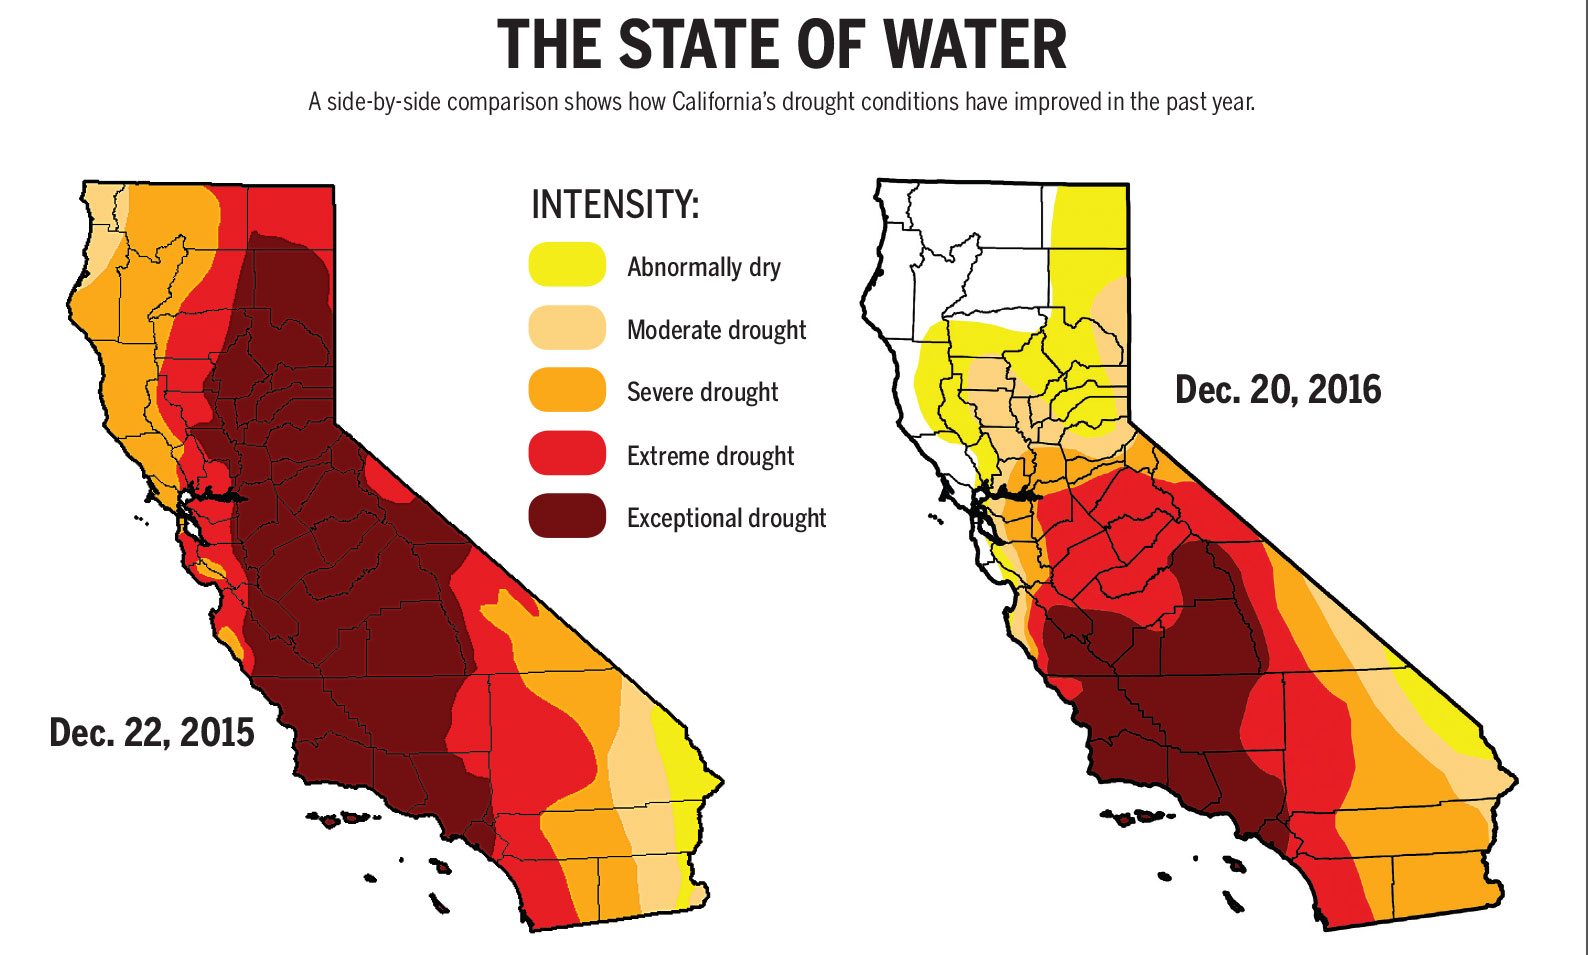 California drought 2015 vs 2016